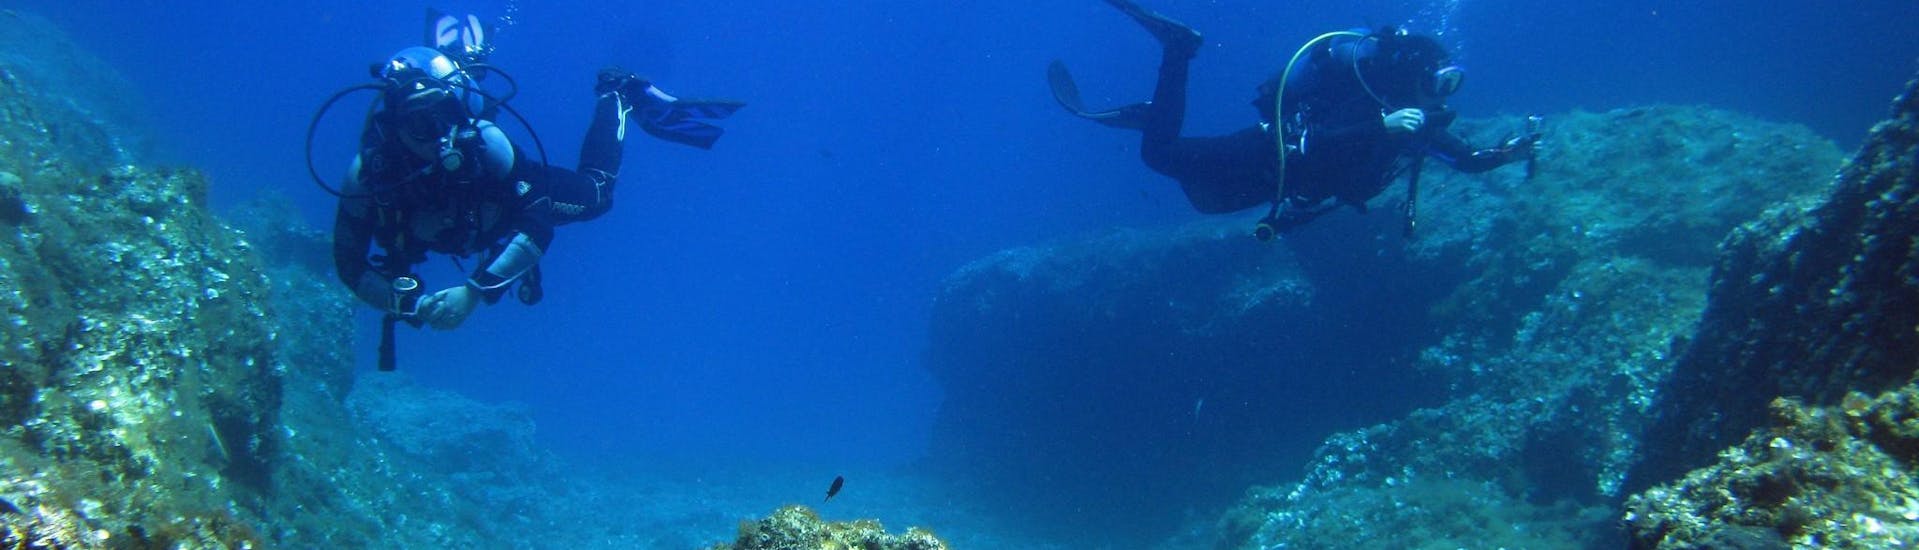 scuba-diving-course-for-beginners-padi-scuba-diver-kanelakis